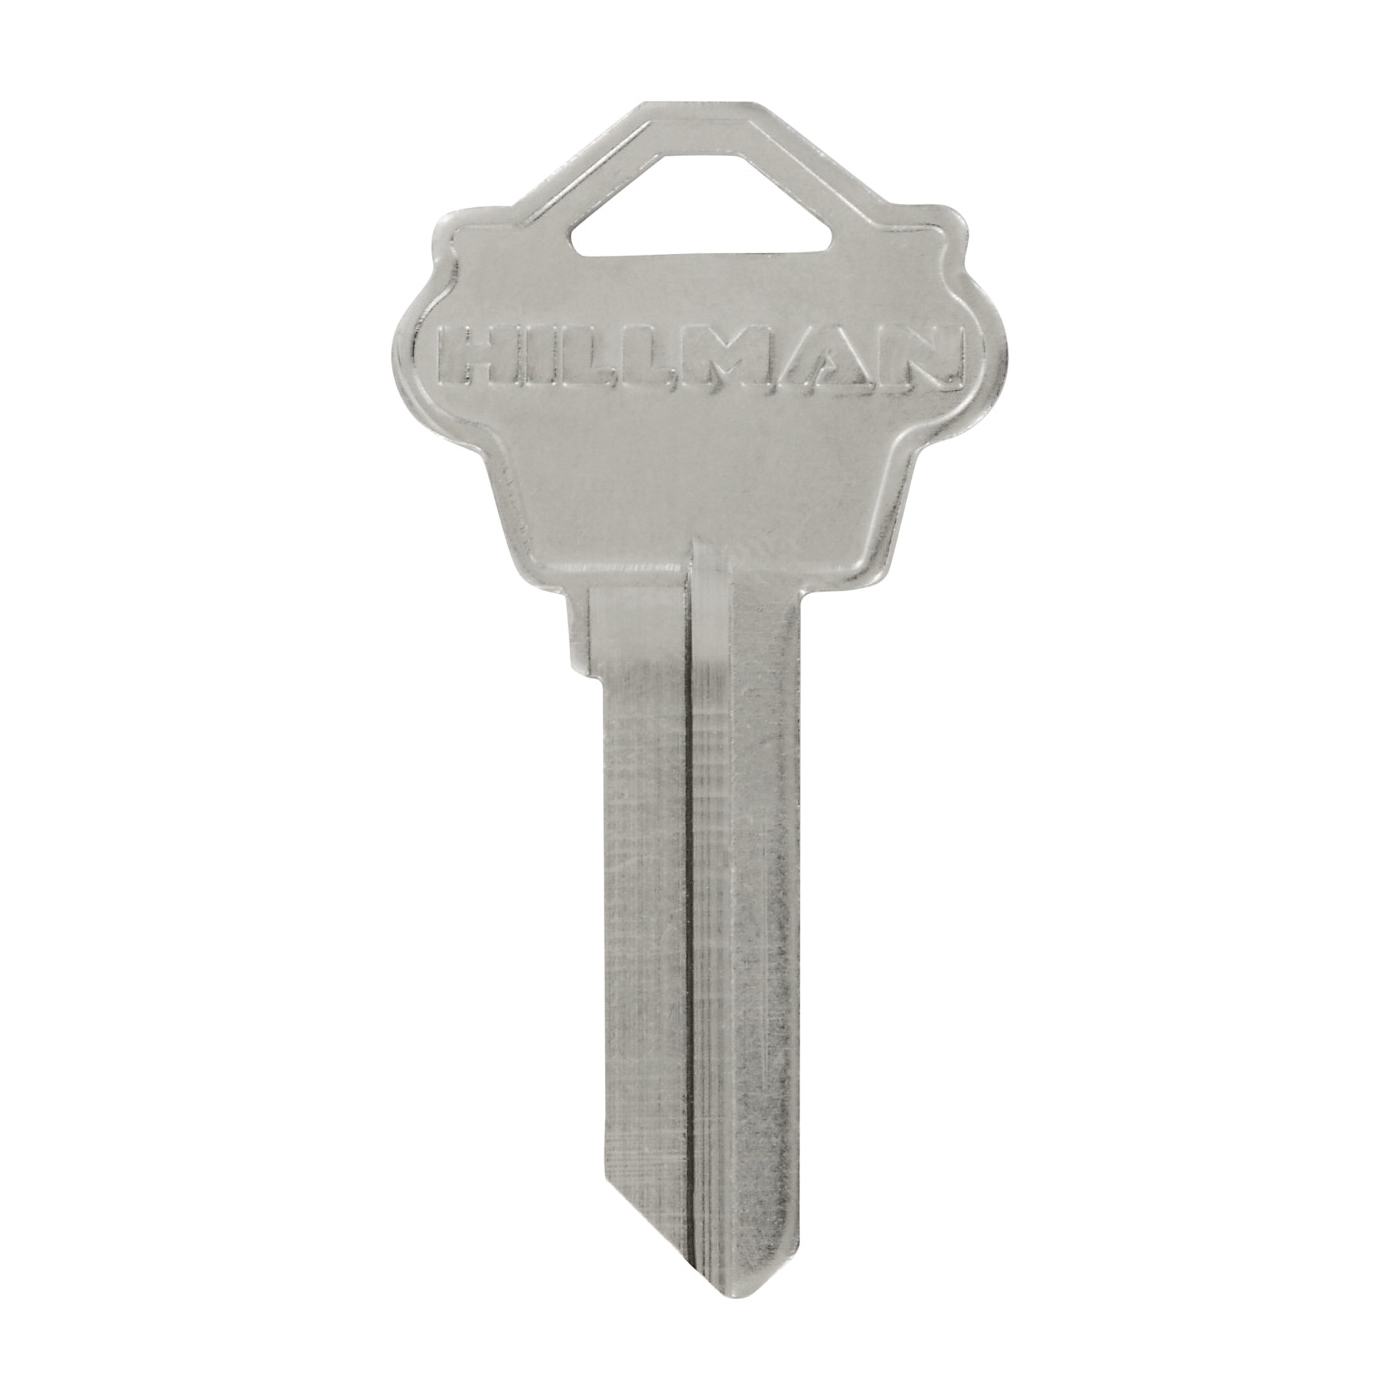 88056 Key Blank, Brass, Nickel-Plated, For: Westlock Locks